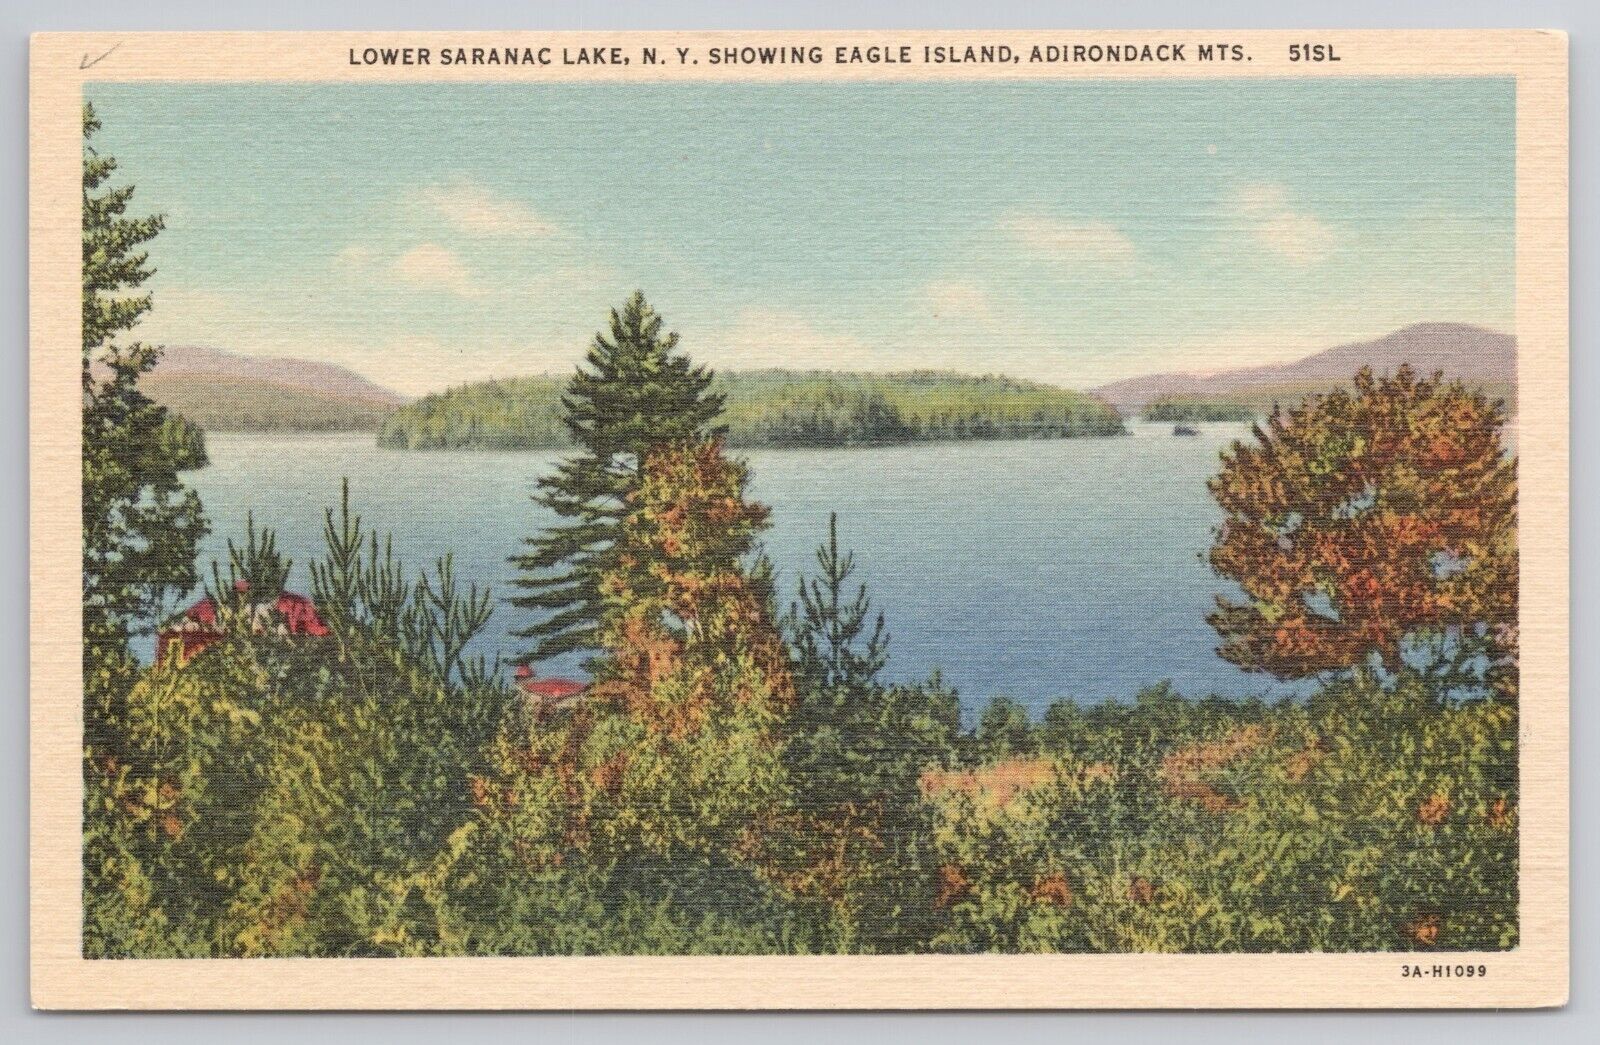 Lower Saranac Lake Eagle Island Adirondacks New York NY 1930s Postcard